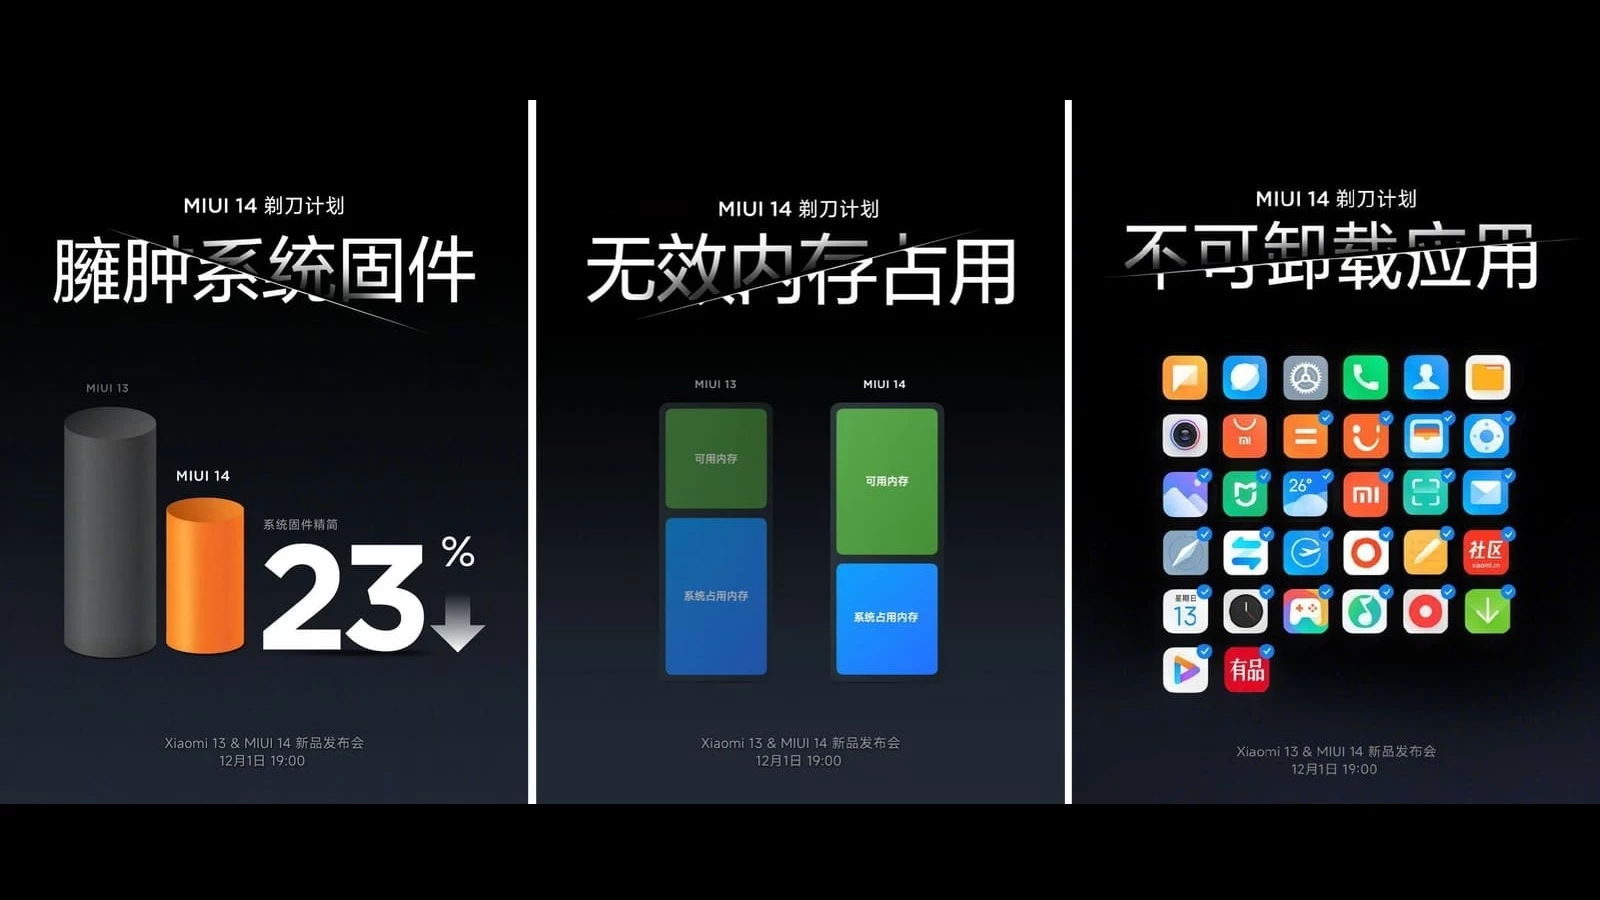 Звуки miui 14. Супер иконки MIUI 14. MIUI 14 Global. Xiaomi MIUI 14. Xiaomi 13.